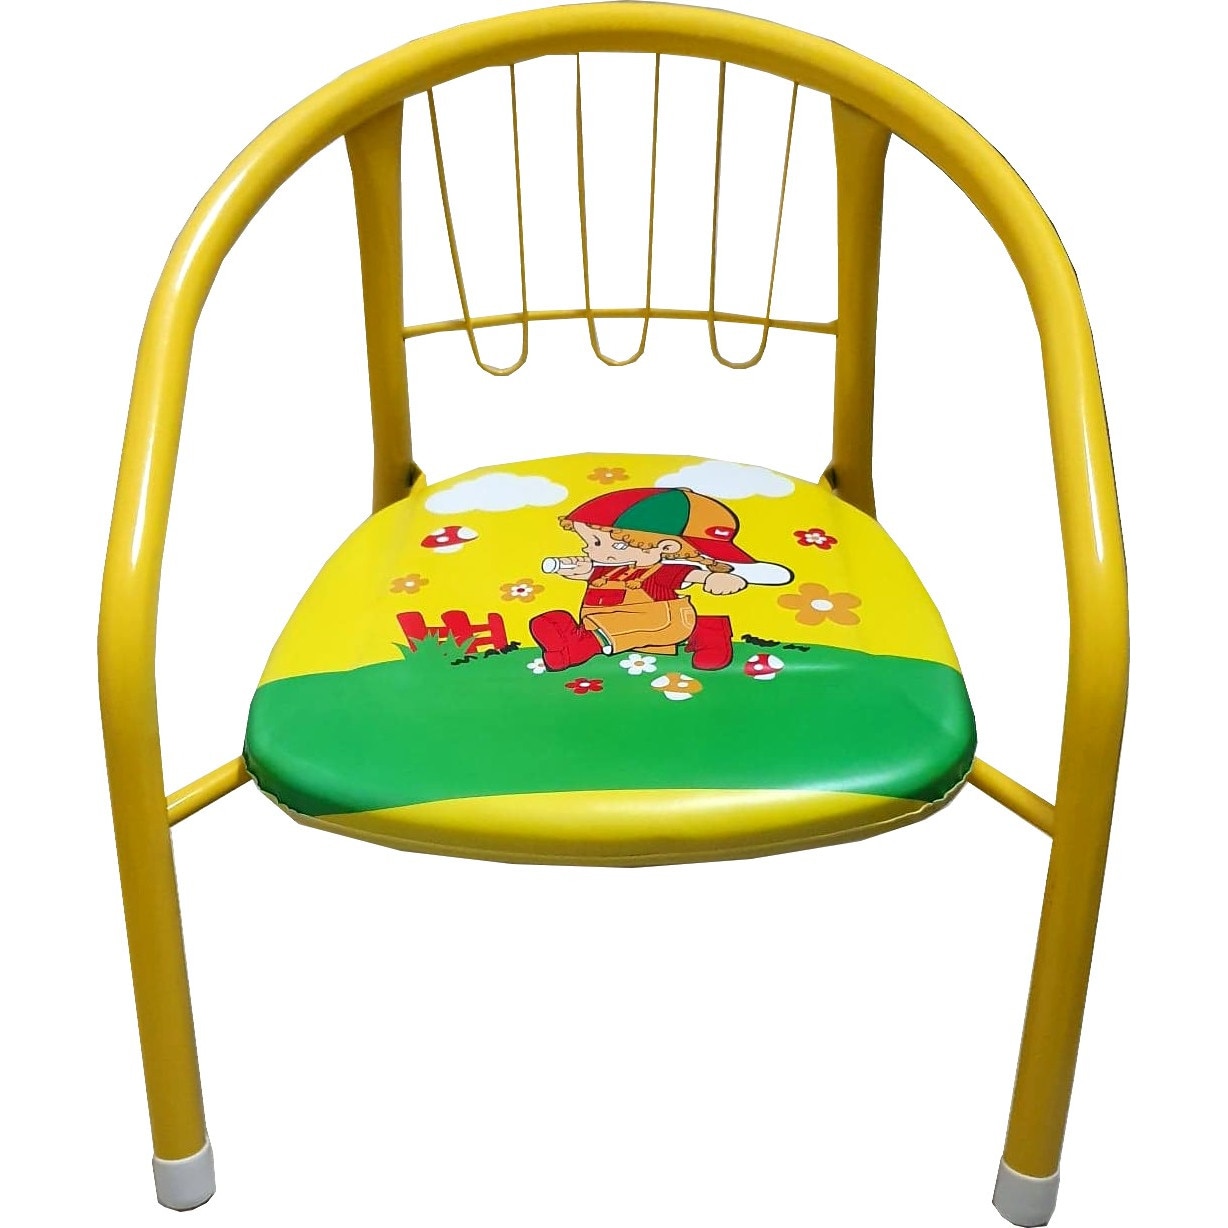 Student pupil cup Scaun metalic pentru copii Novokids™ Little chair, Sezut moale cu sunete,  Pentru interior si exterior, Dimensiuni 36x36x34 cm, Galben - eMAG.ro